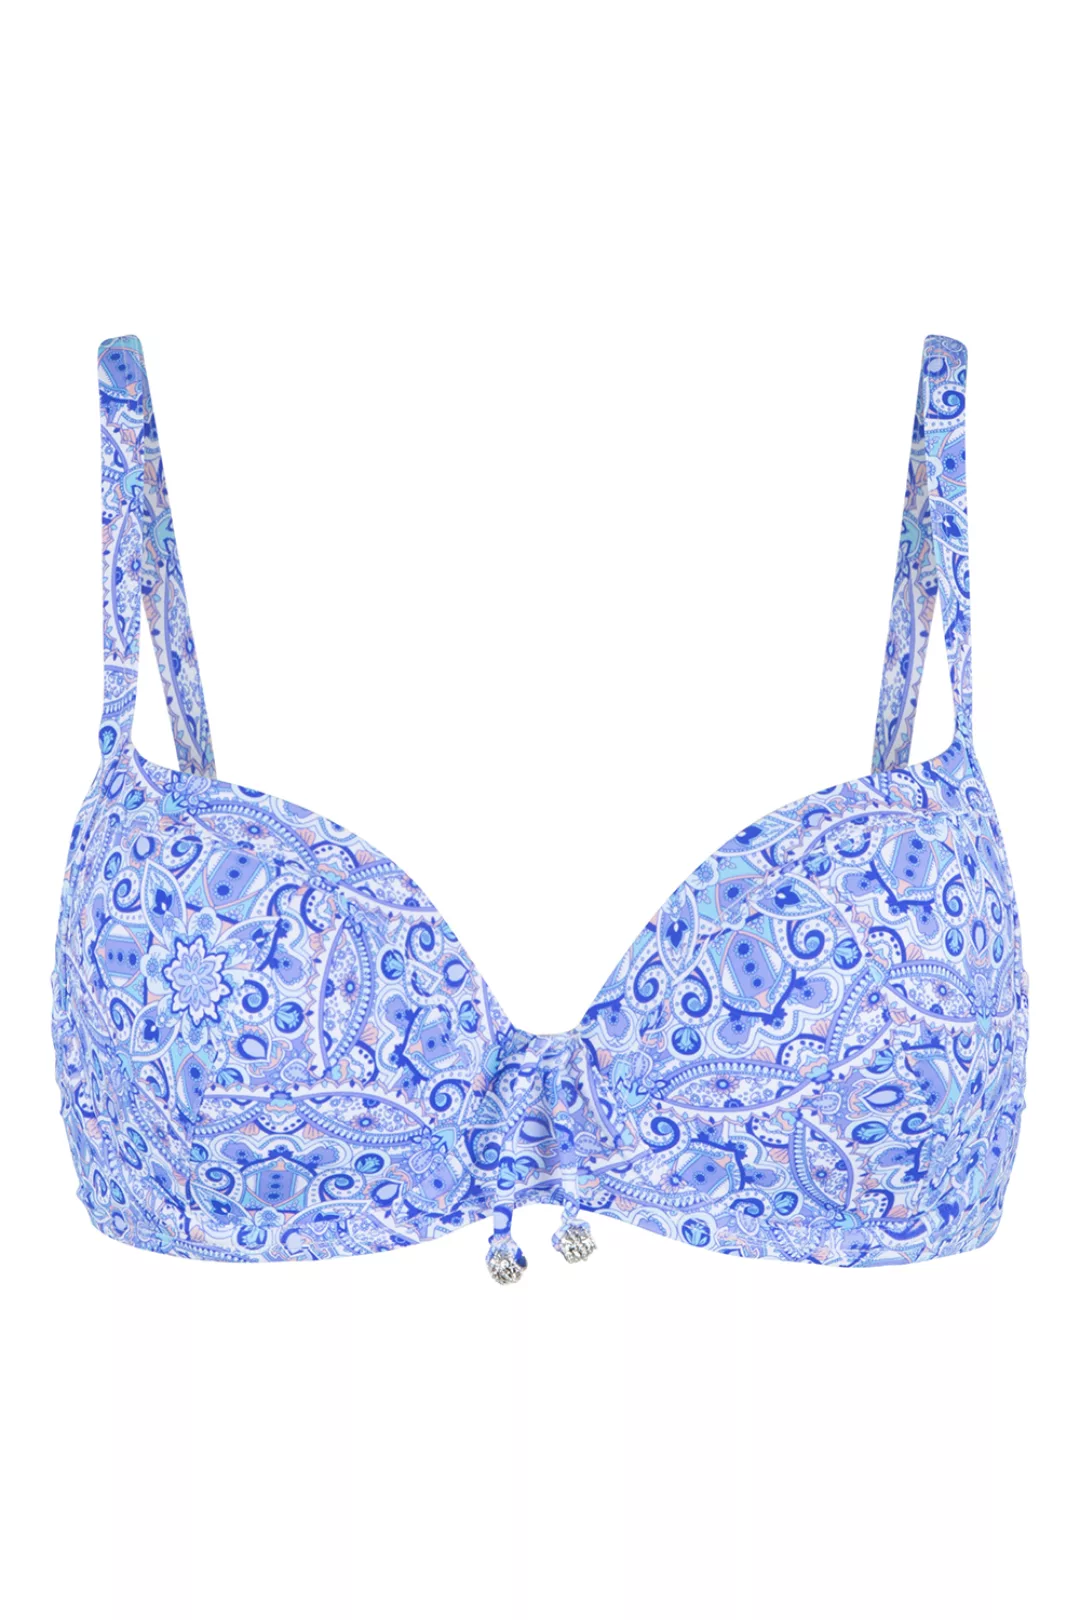 LingaDore Bikini Oberteil geformt Blue Paisley 38B blau günstig online kaufen